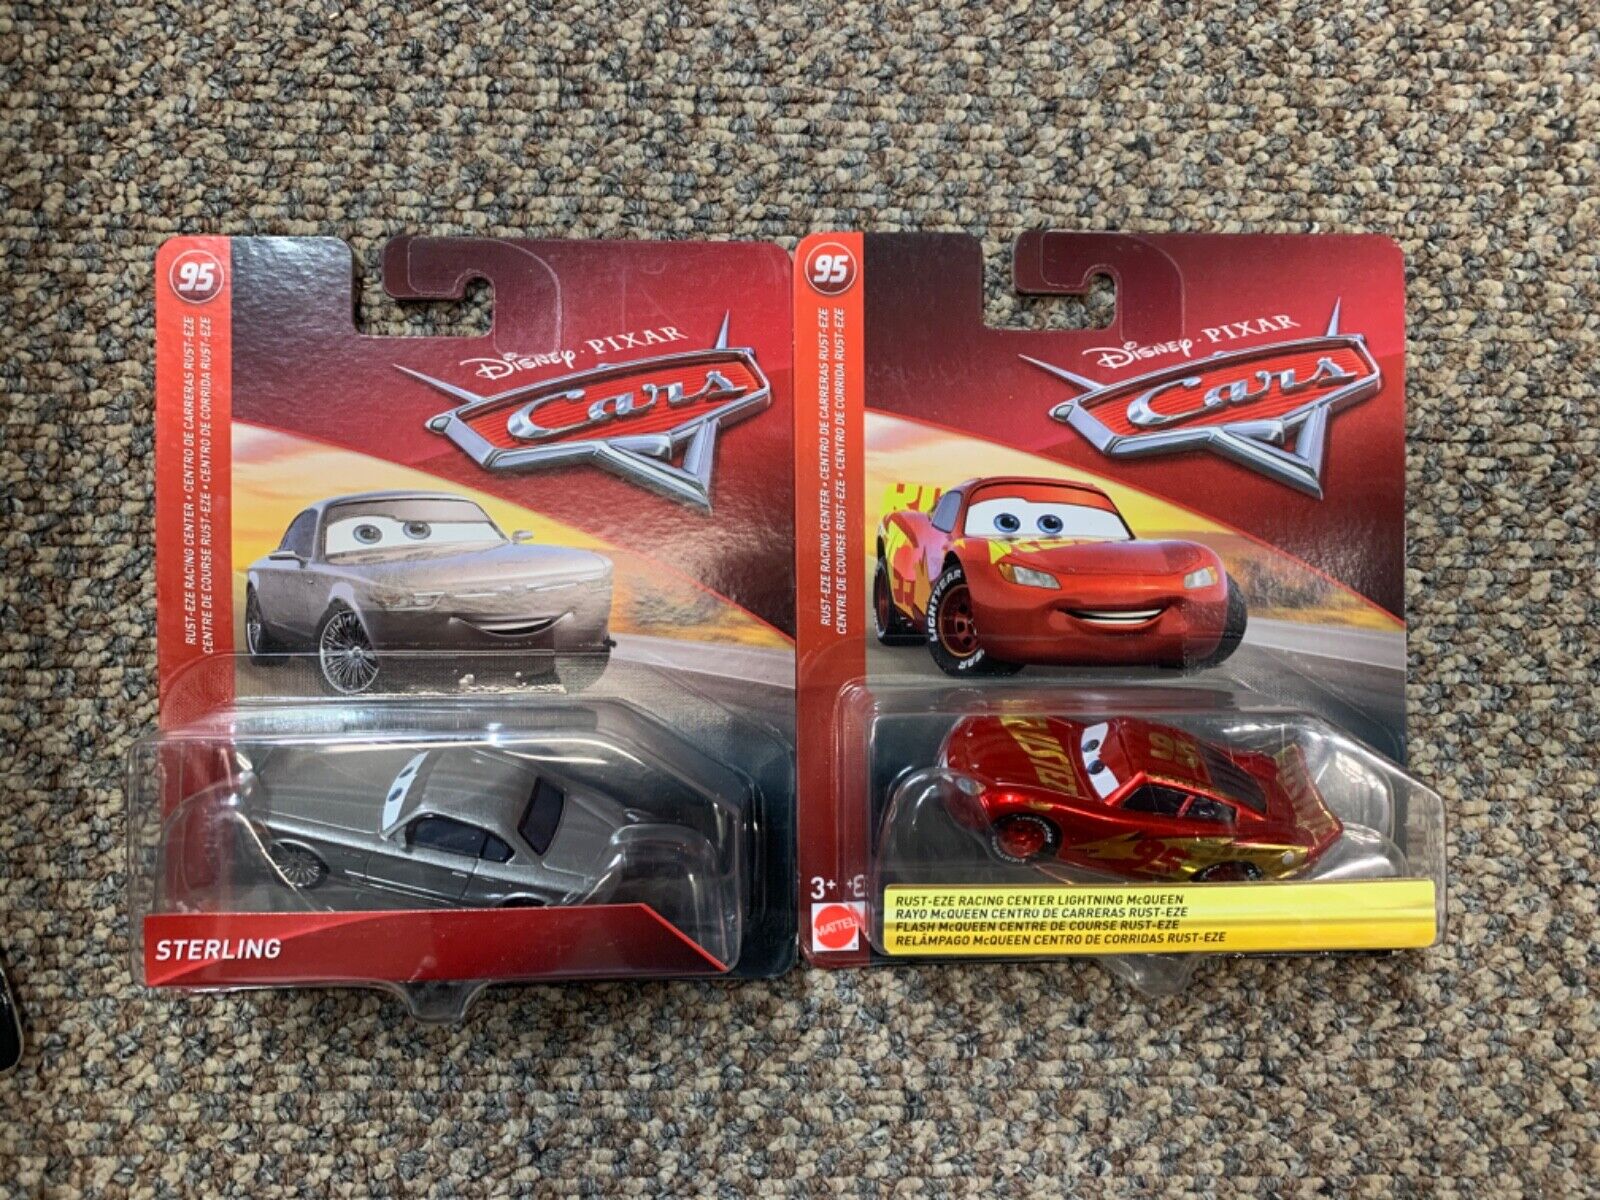 Disney Pixar Cars Sterling & Rust-Eze Racing Center Lightning McQueen lot of 2